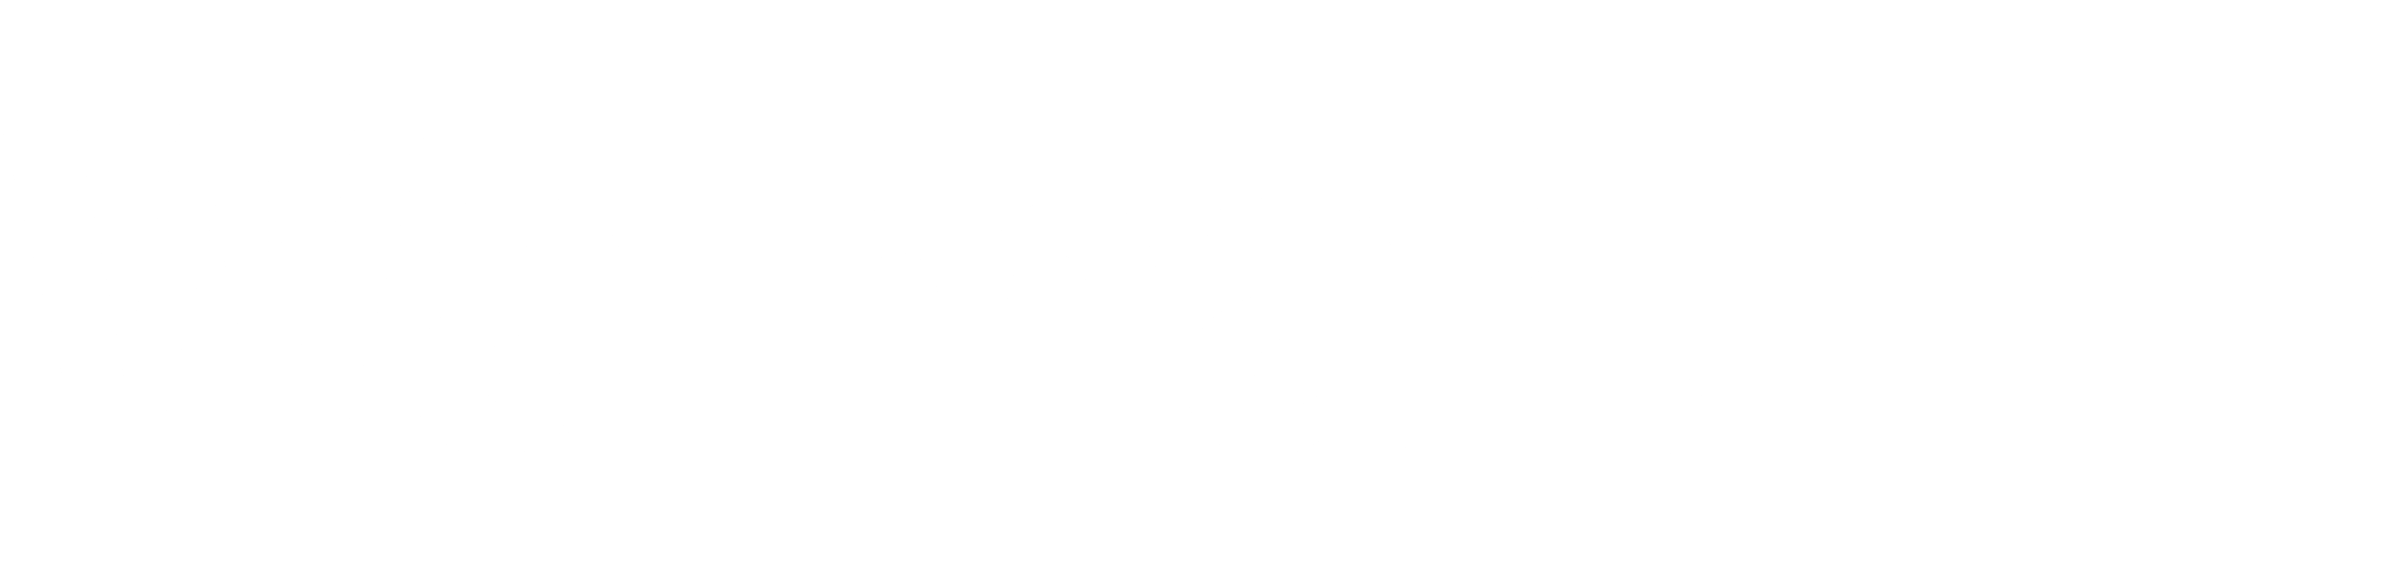 walmart-logo-black-and-white.png